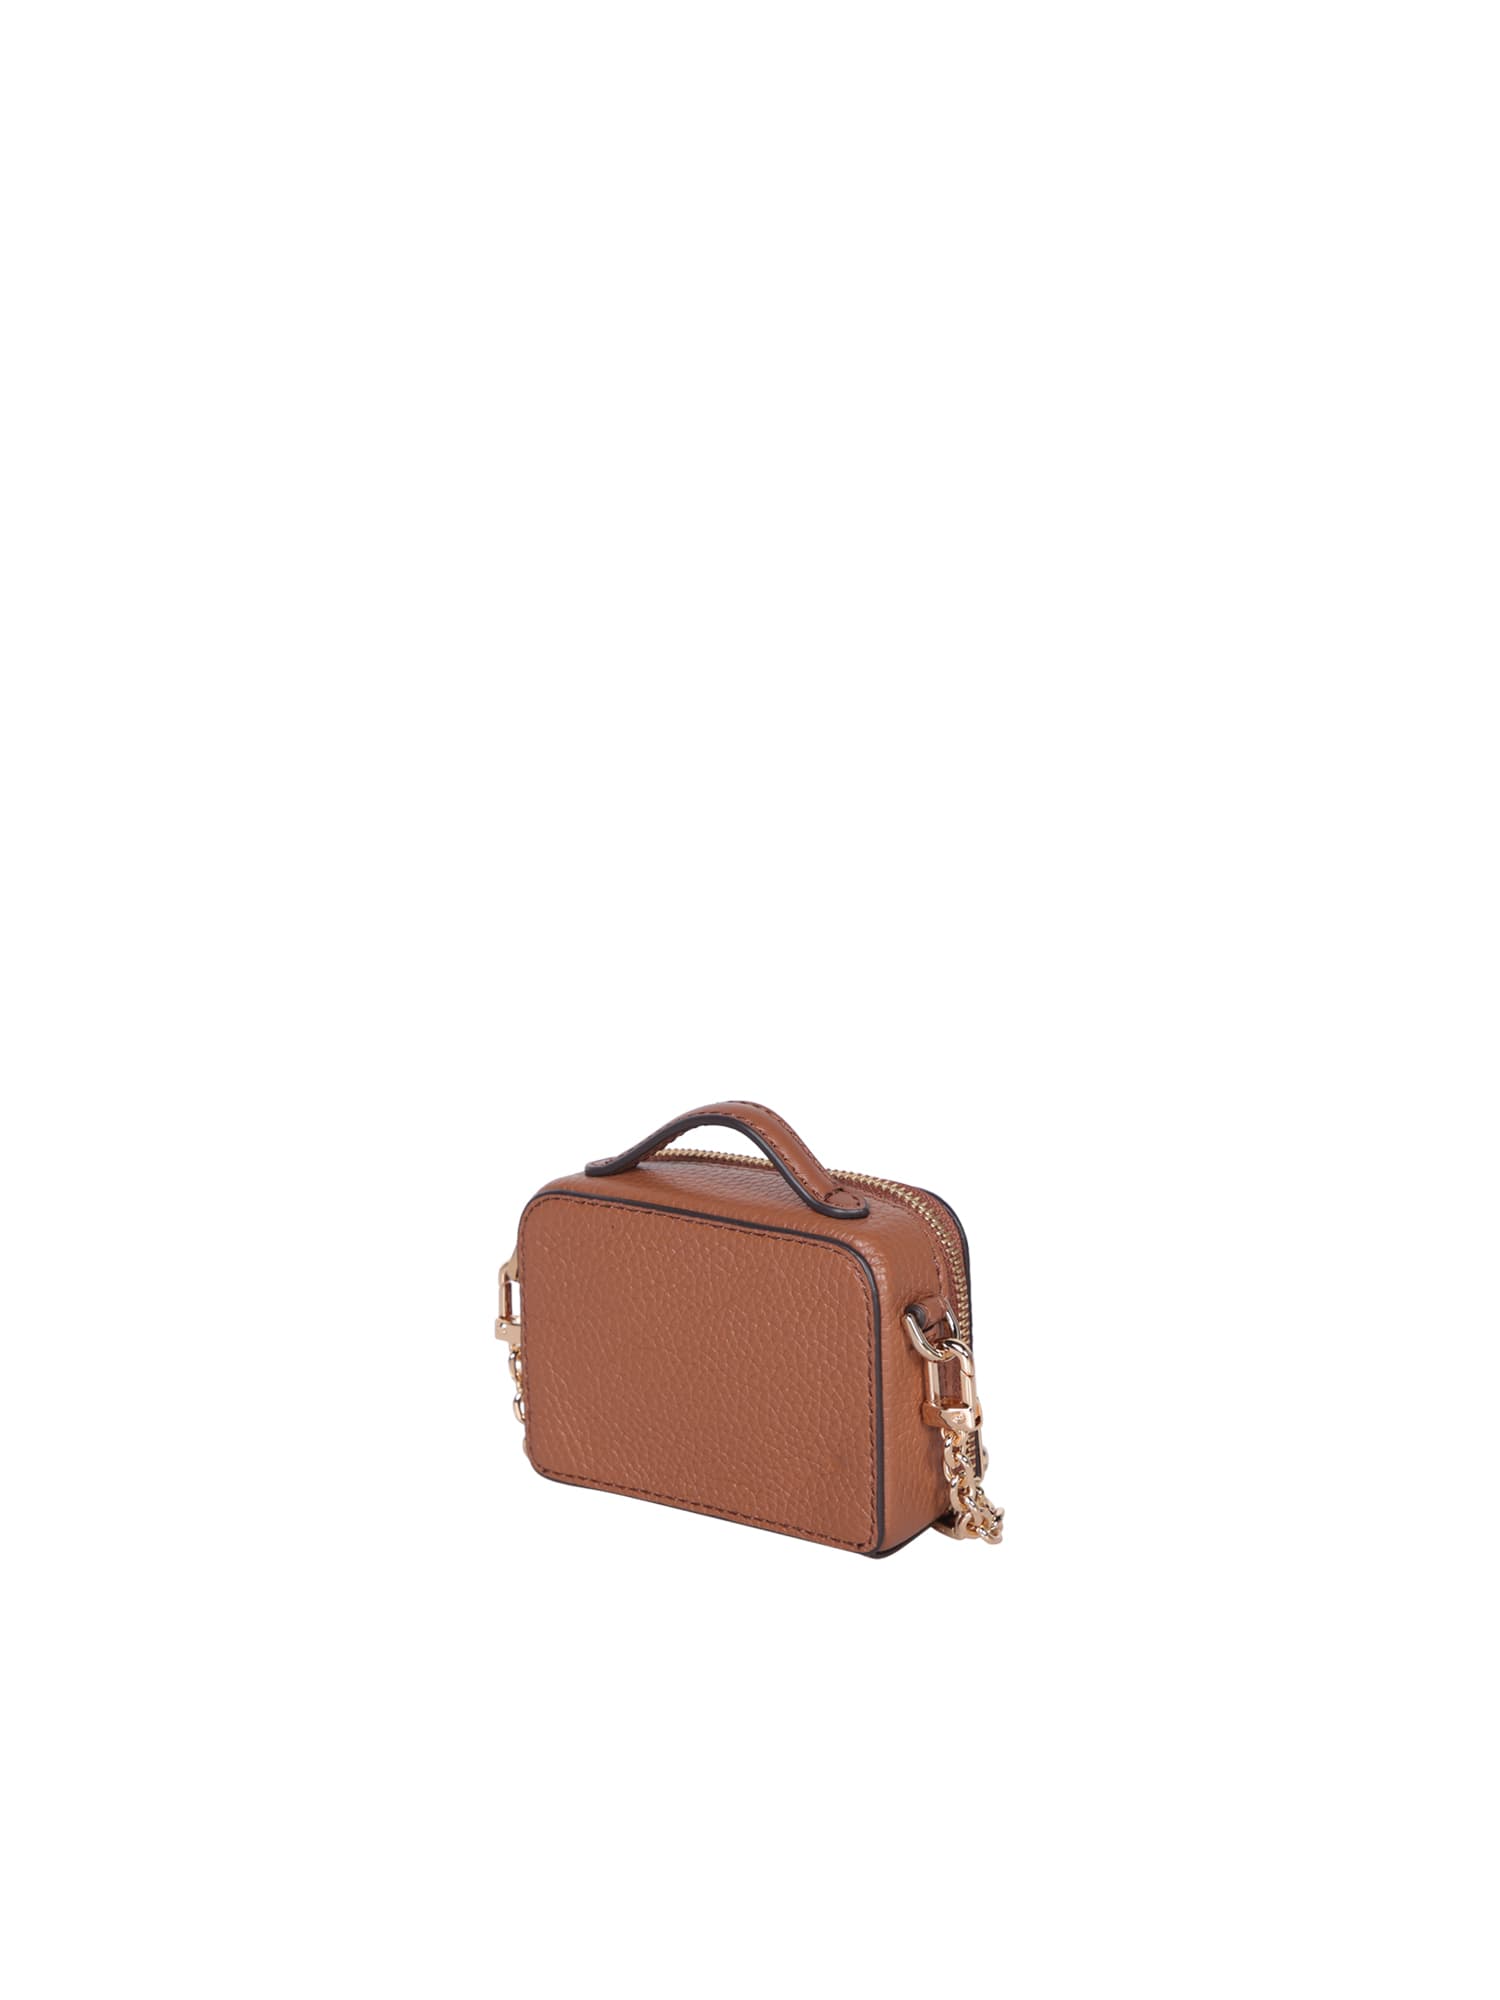 Shop Michael Kors Micro Trunk Brown Shoulder Bag